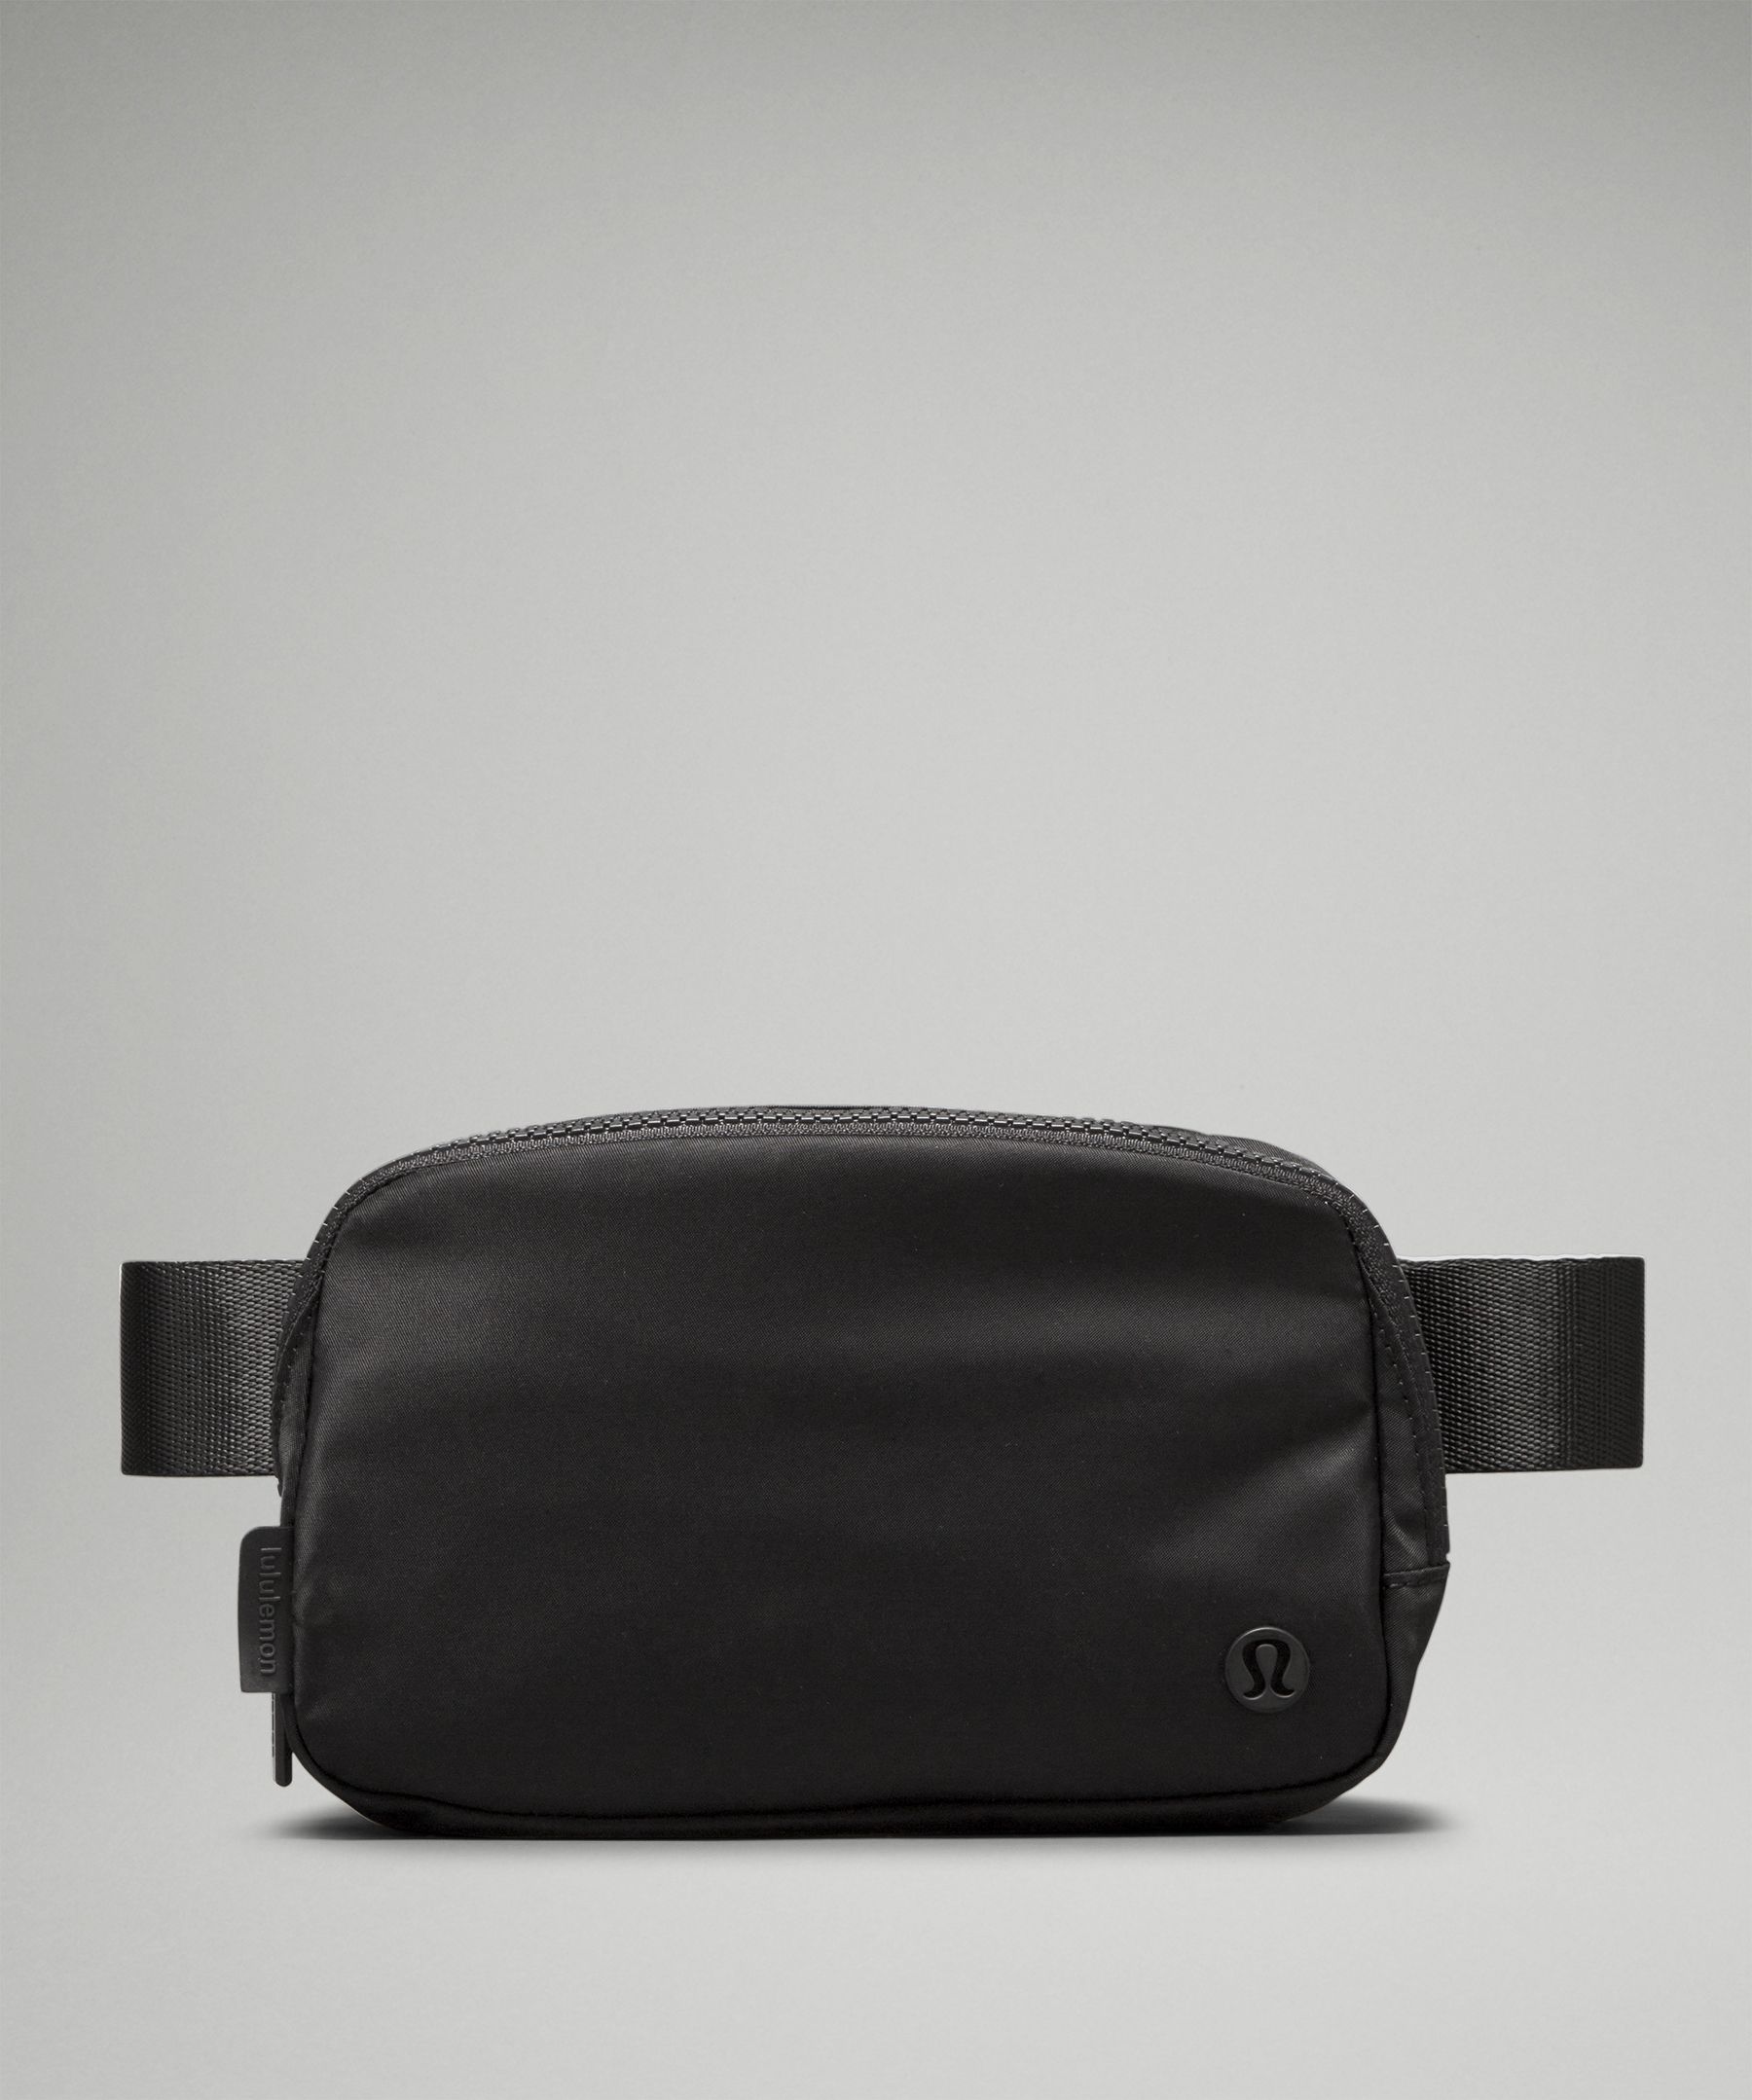 NWT Lululemon Everywhere Belt Bag Crossbody Extended Strap - Black